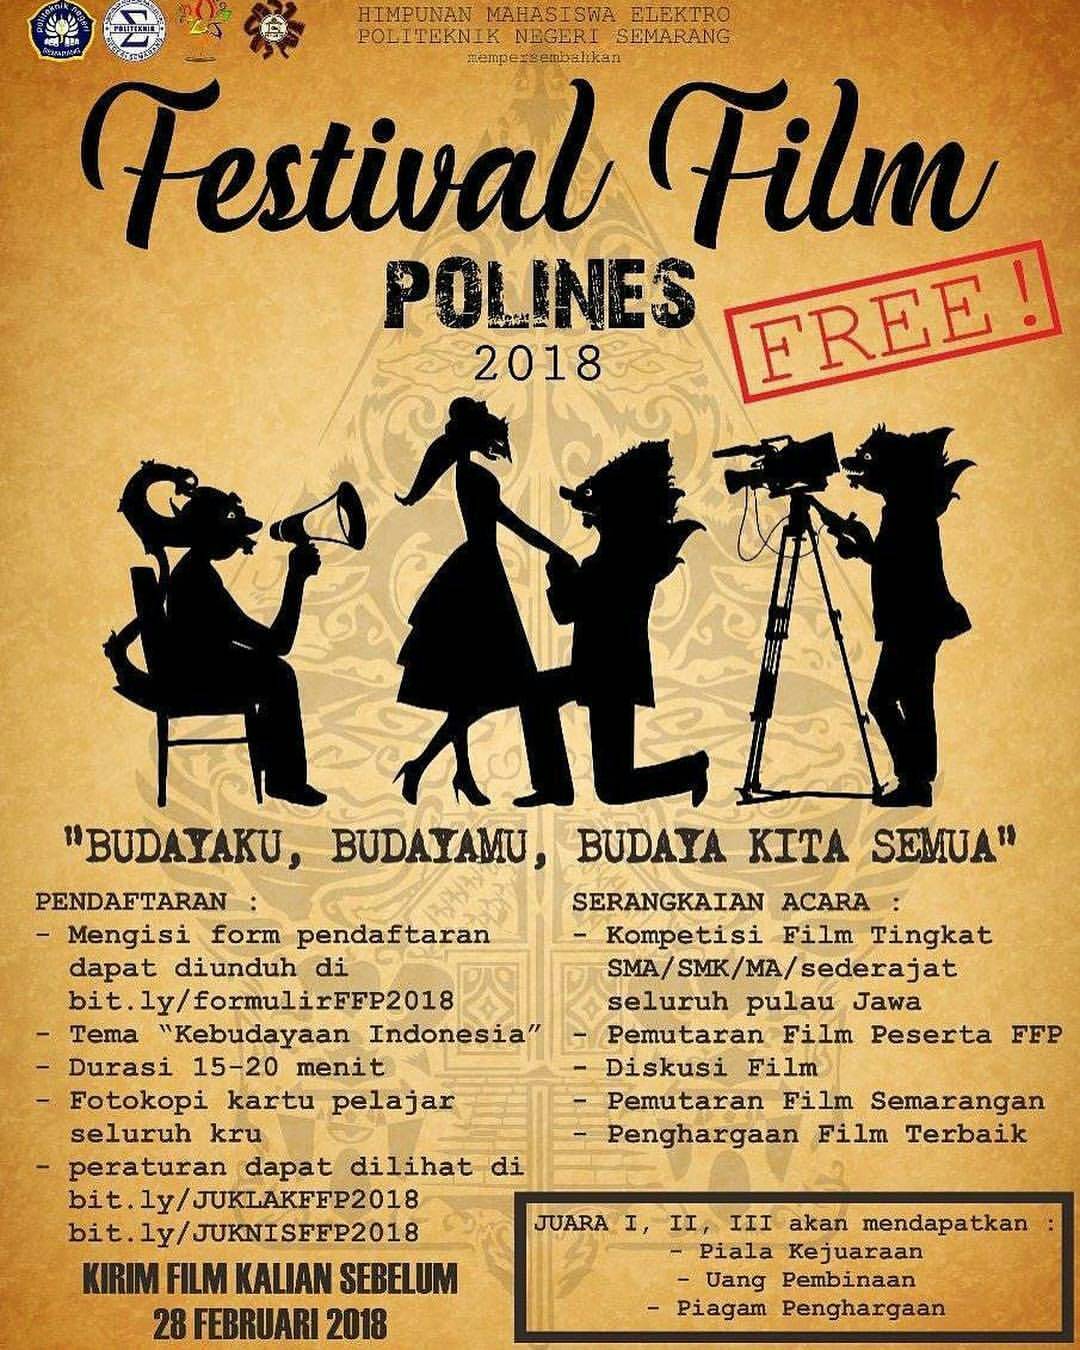 EVENT FESTIVAL FILM POLINES SEMARANG 2018